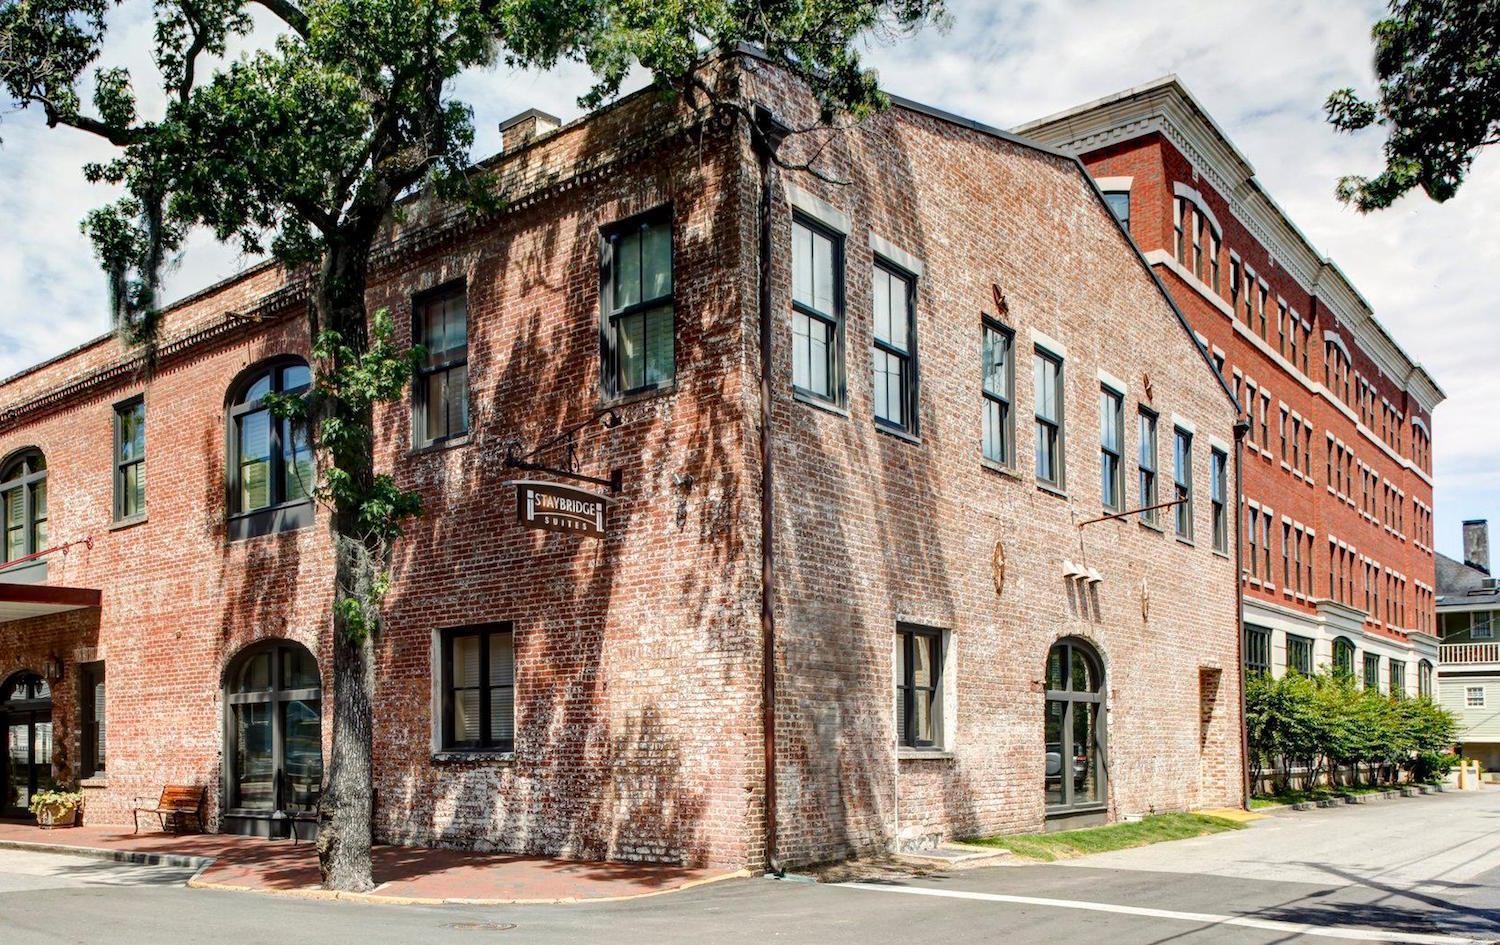 Photo of Staybridge Suites Savannah Historic District, Savannah, GA